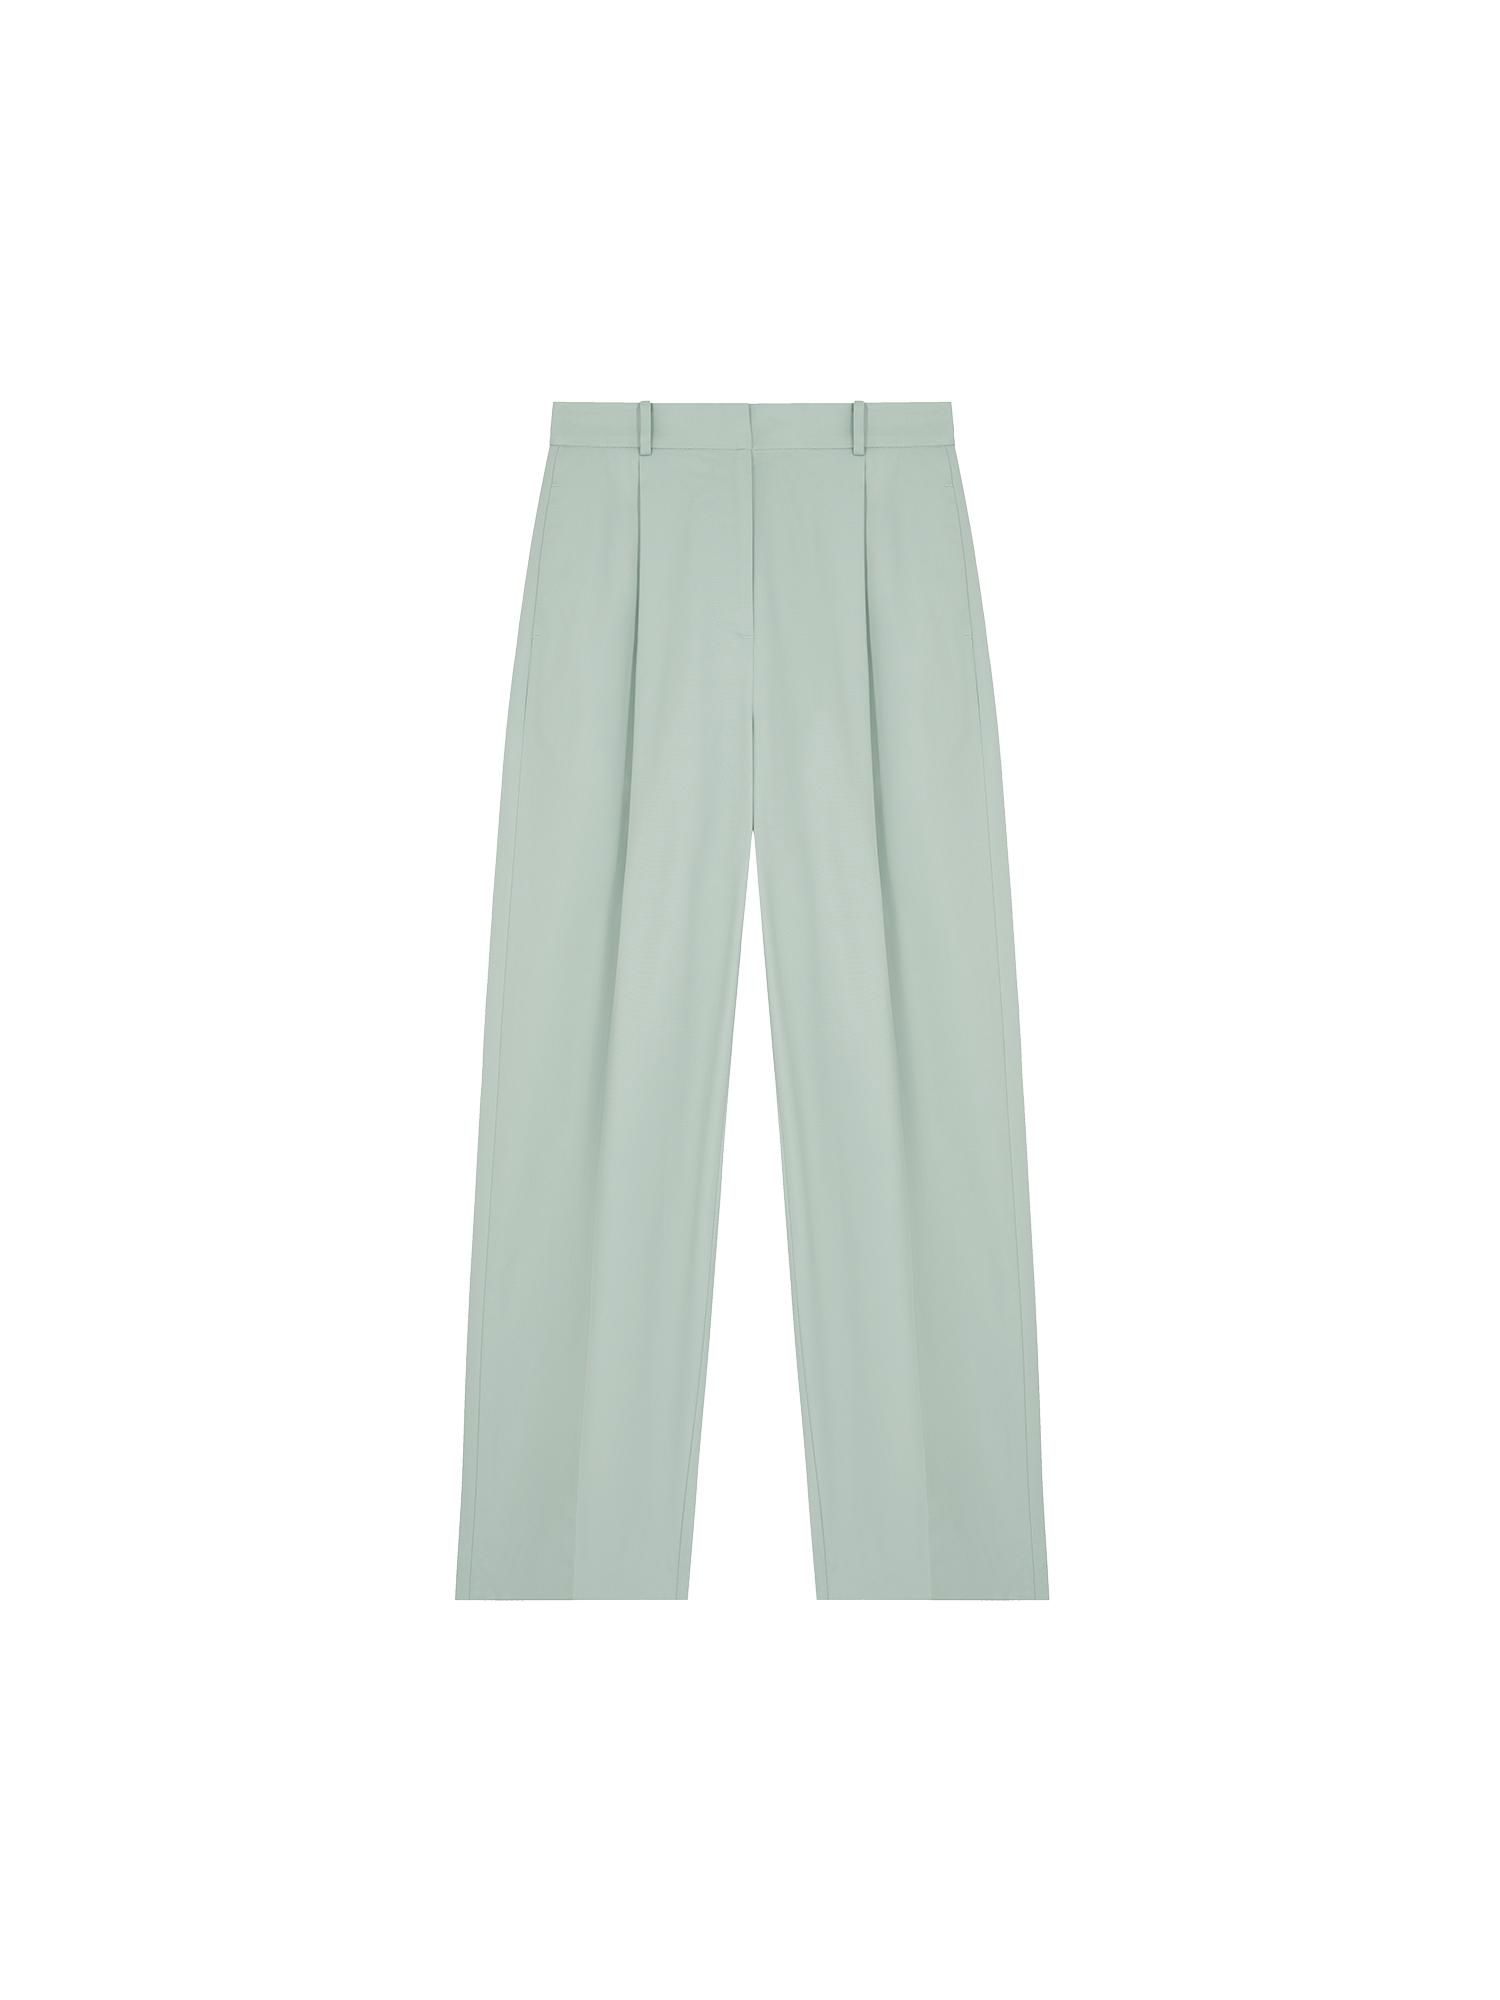 Women's Cotton Tailored Trousers—Eucalyptus Blue by PANGAIA